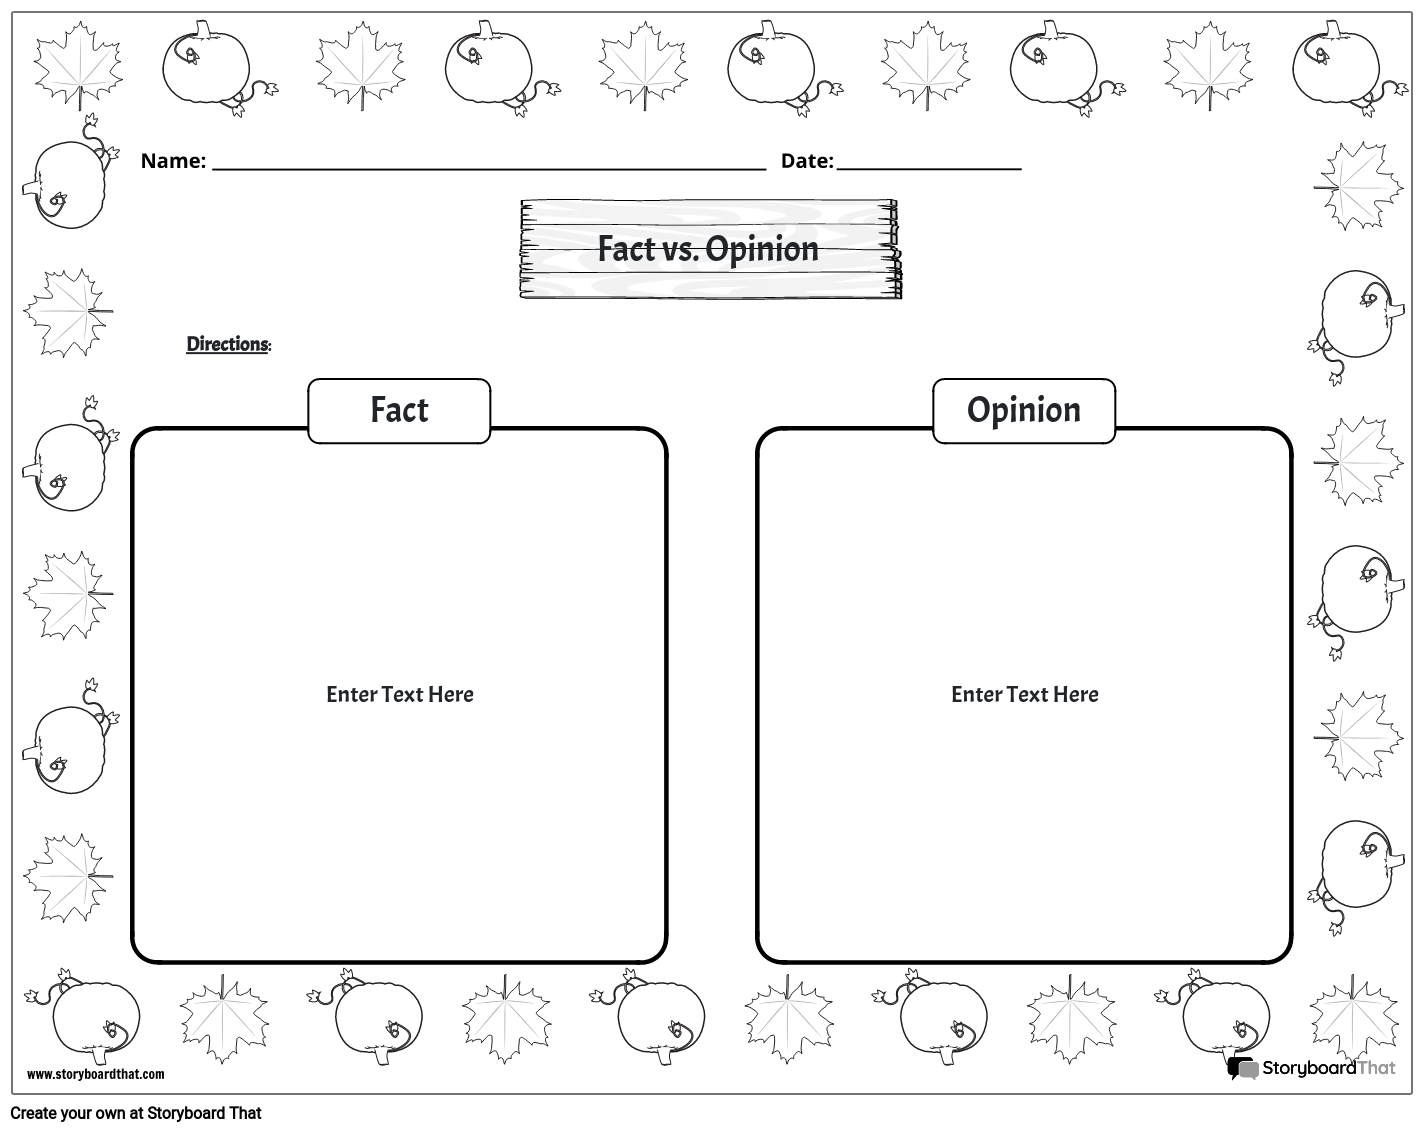 fact-vs-opinion-3-storyboard-por-worksheet-templates